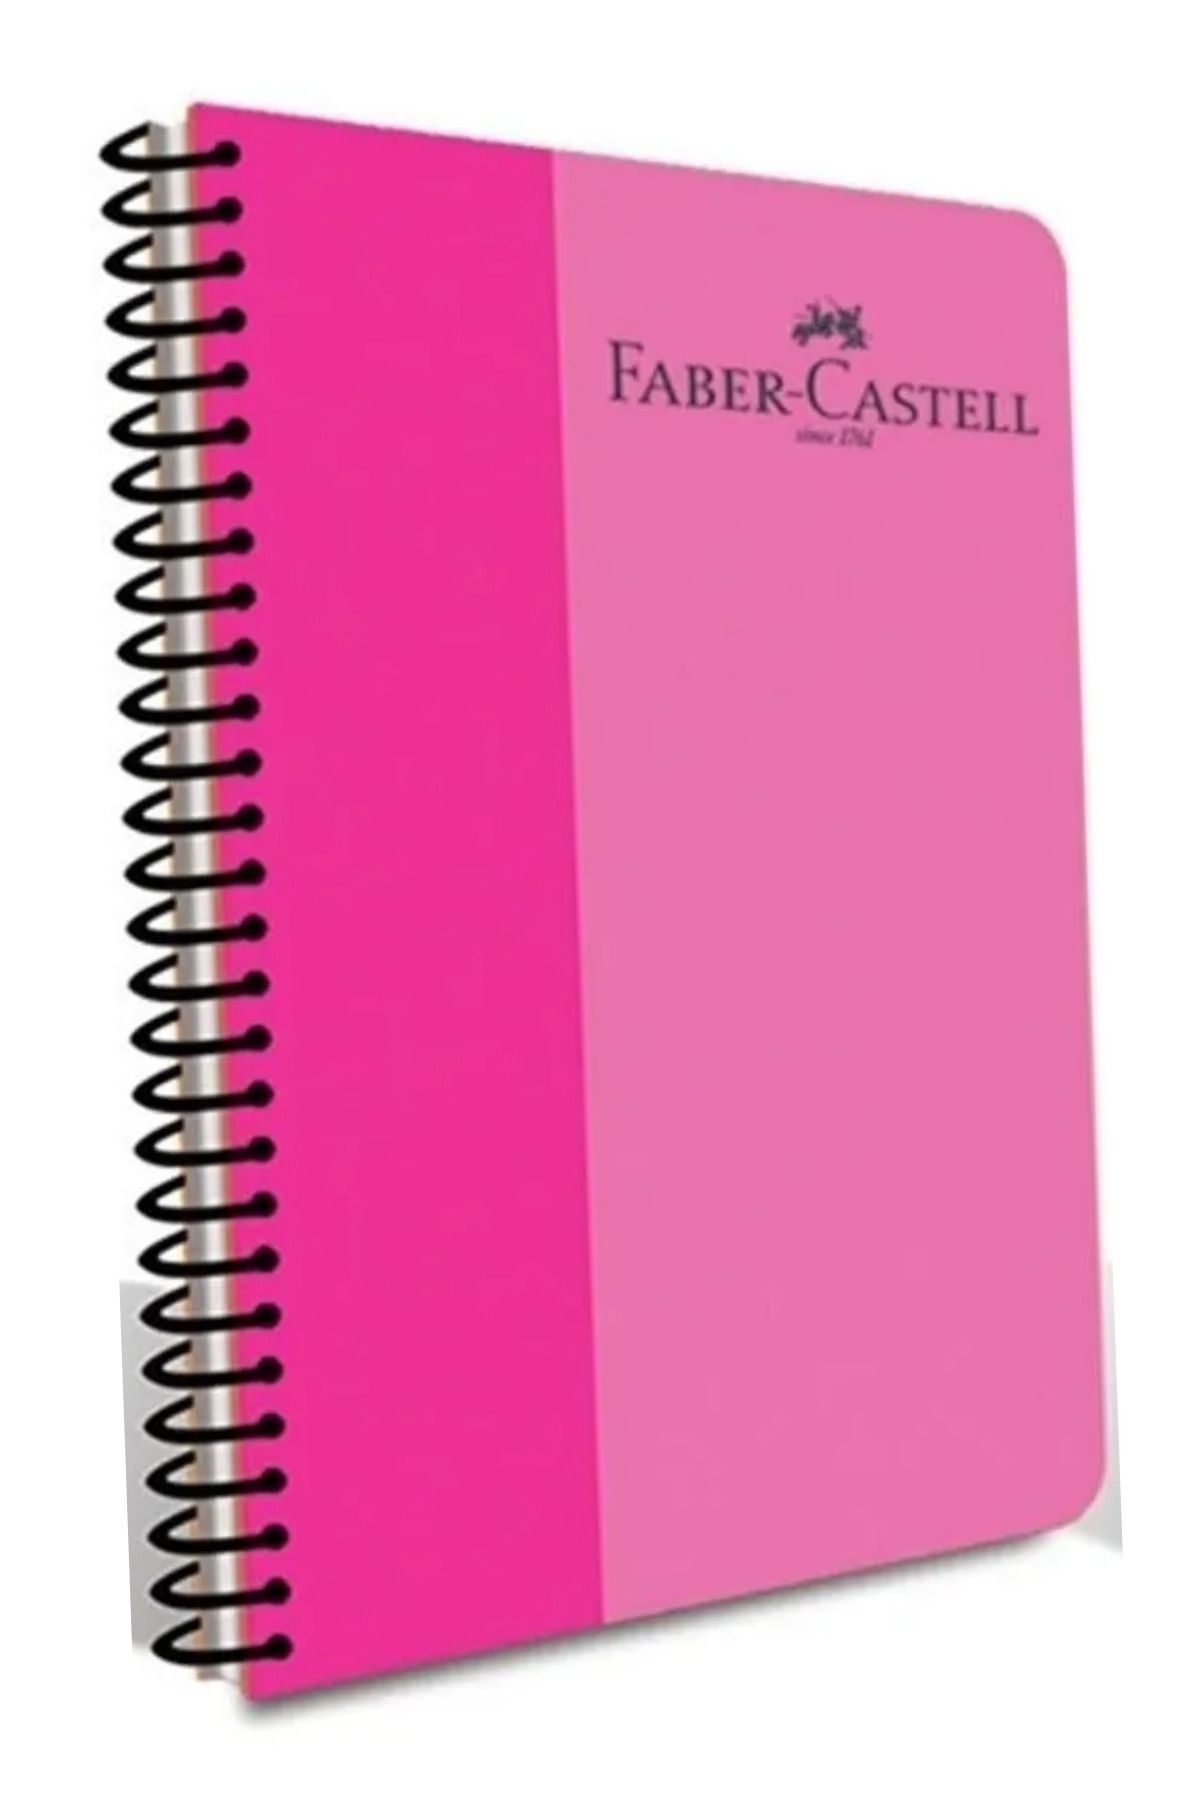 Faber Castell A4 Spiralli Bicolor Plastik Kapak Telli Defter 160 Yaprak Çizgili Mavi